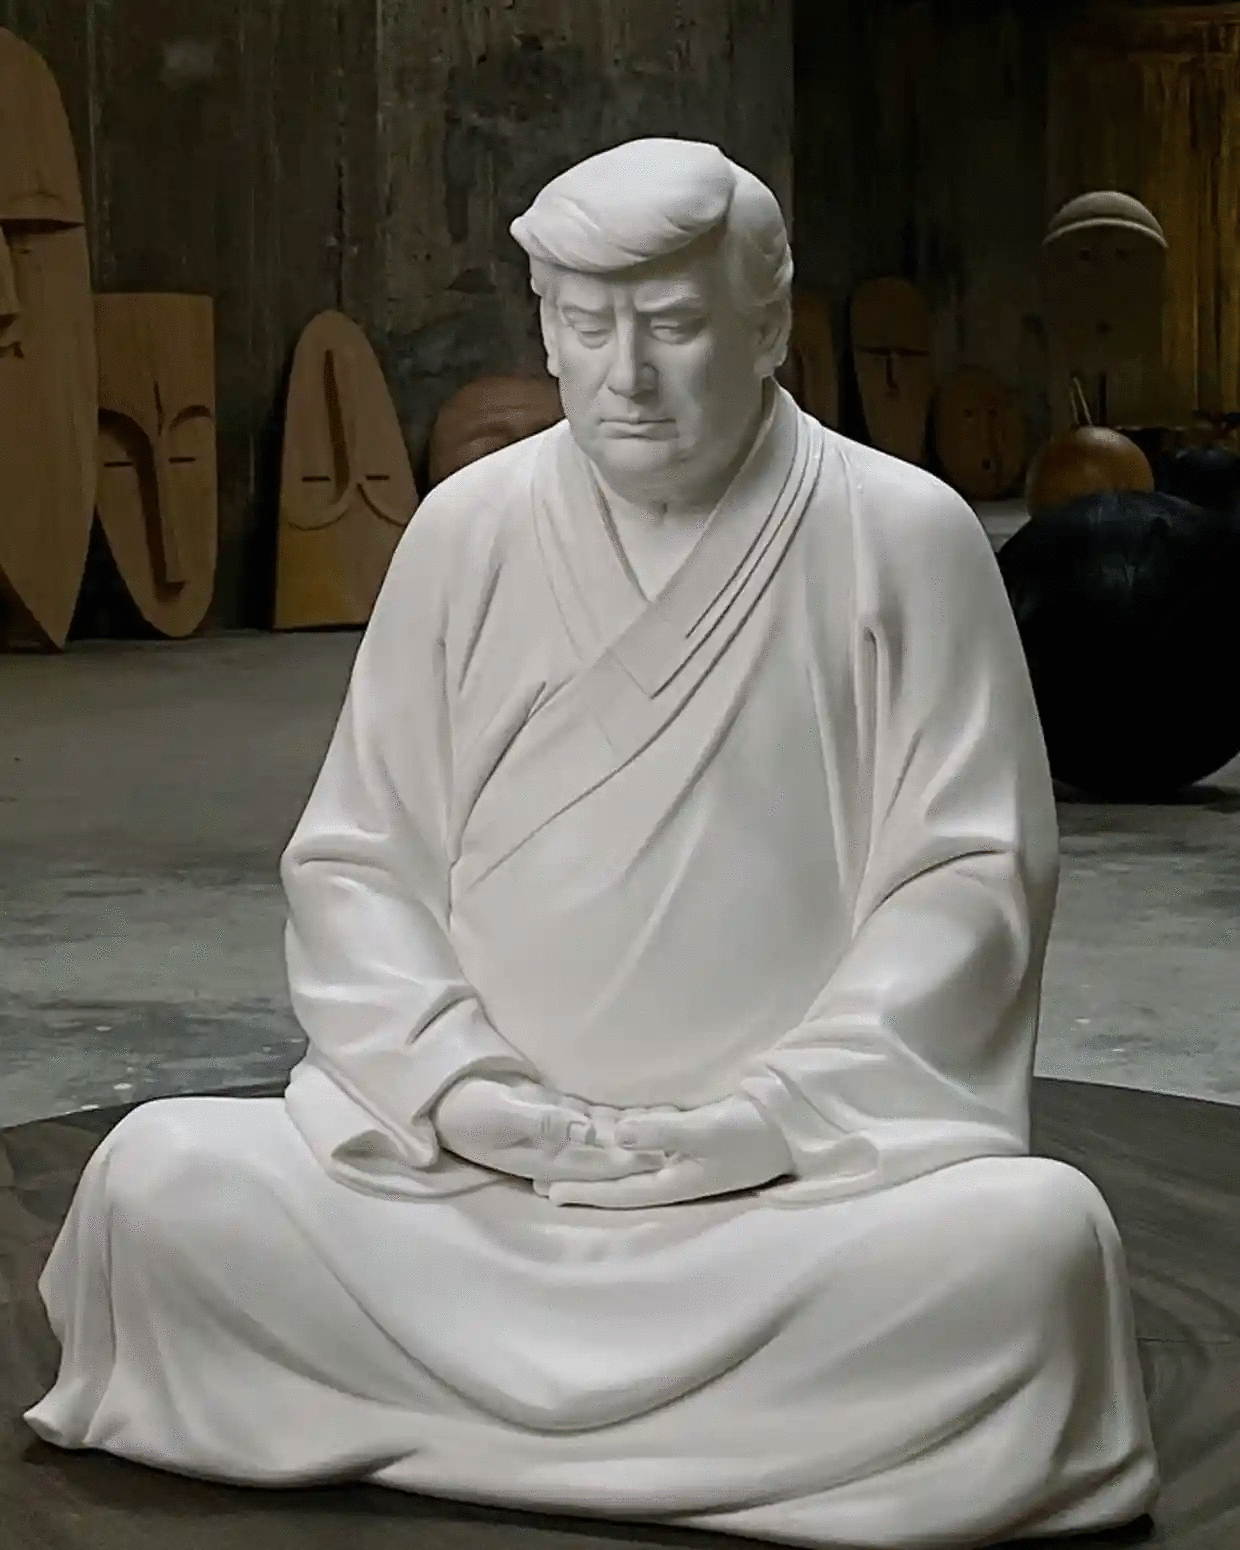 La estatua de Trump para la "buena suerte"